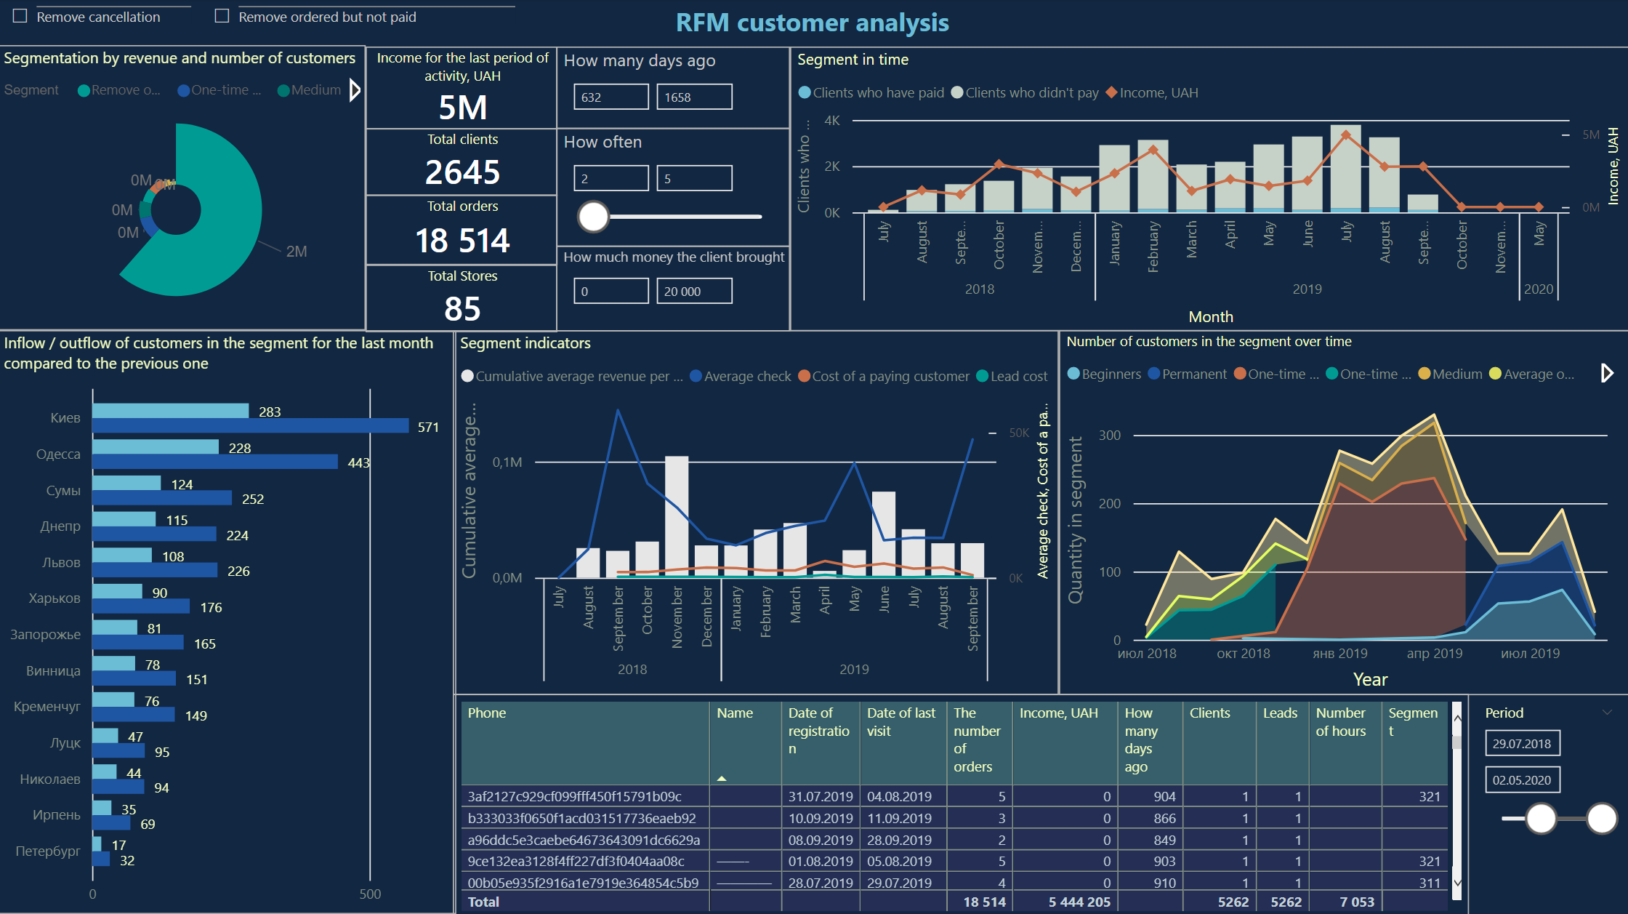 RFM customer analysis